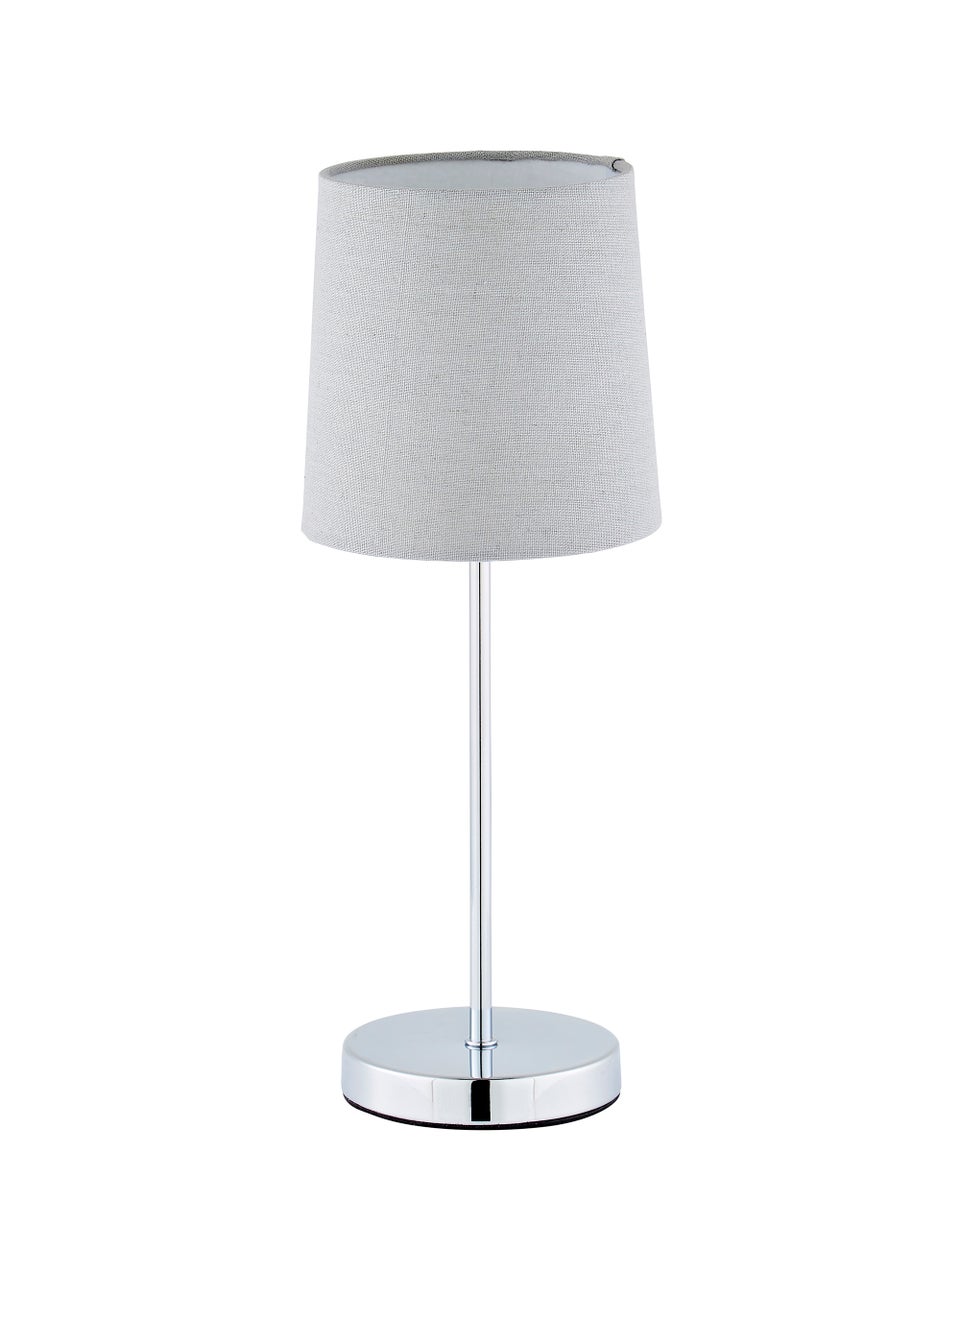 BHS Grey Touch Stick Table Lamp (40cm x 15cm x 15cm)